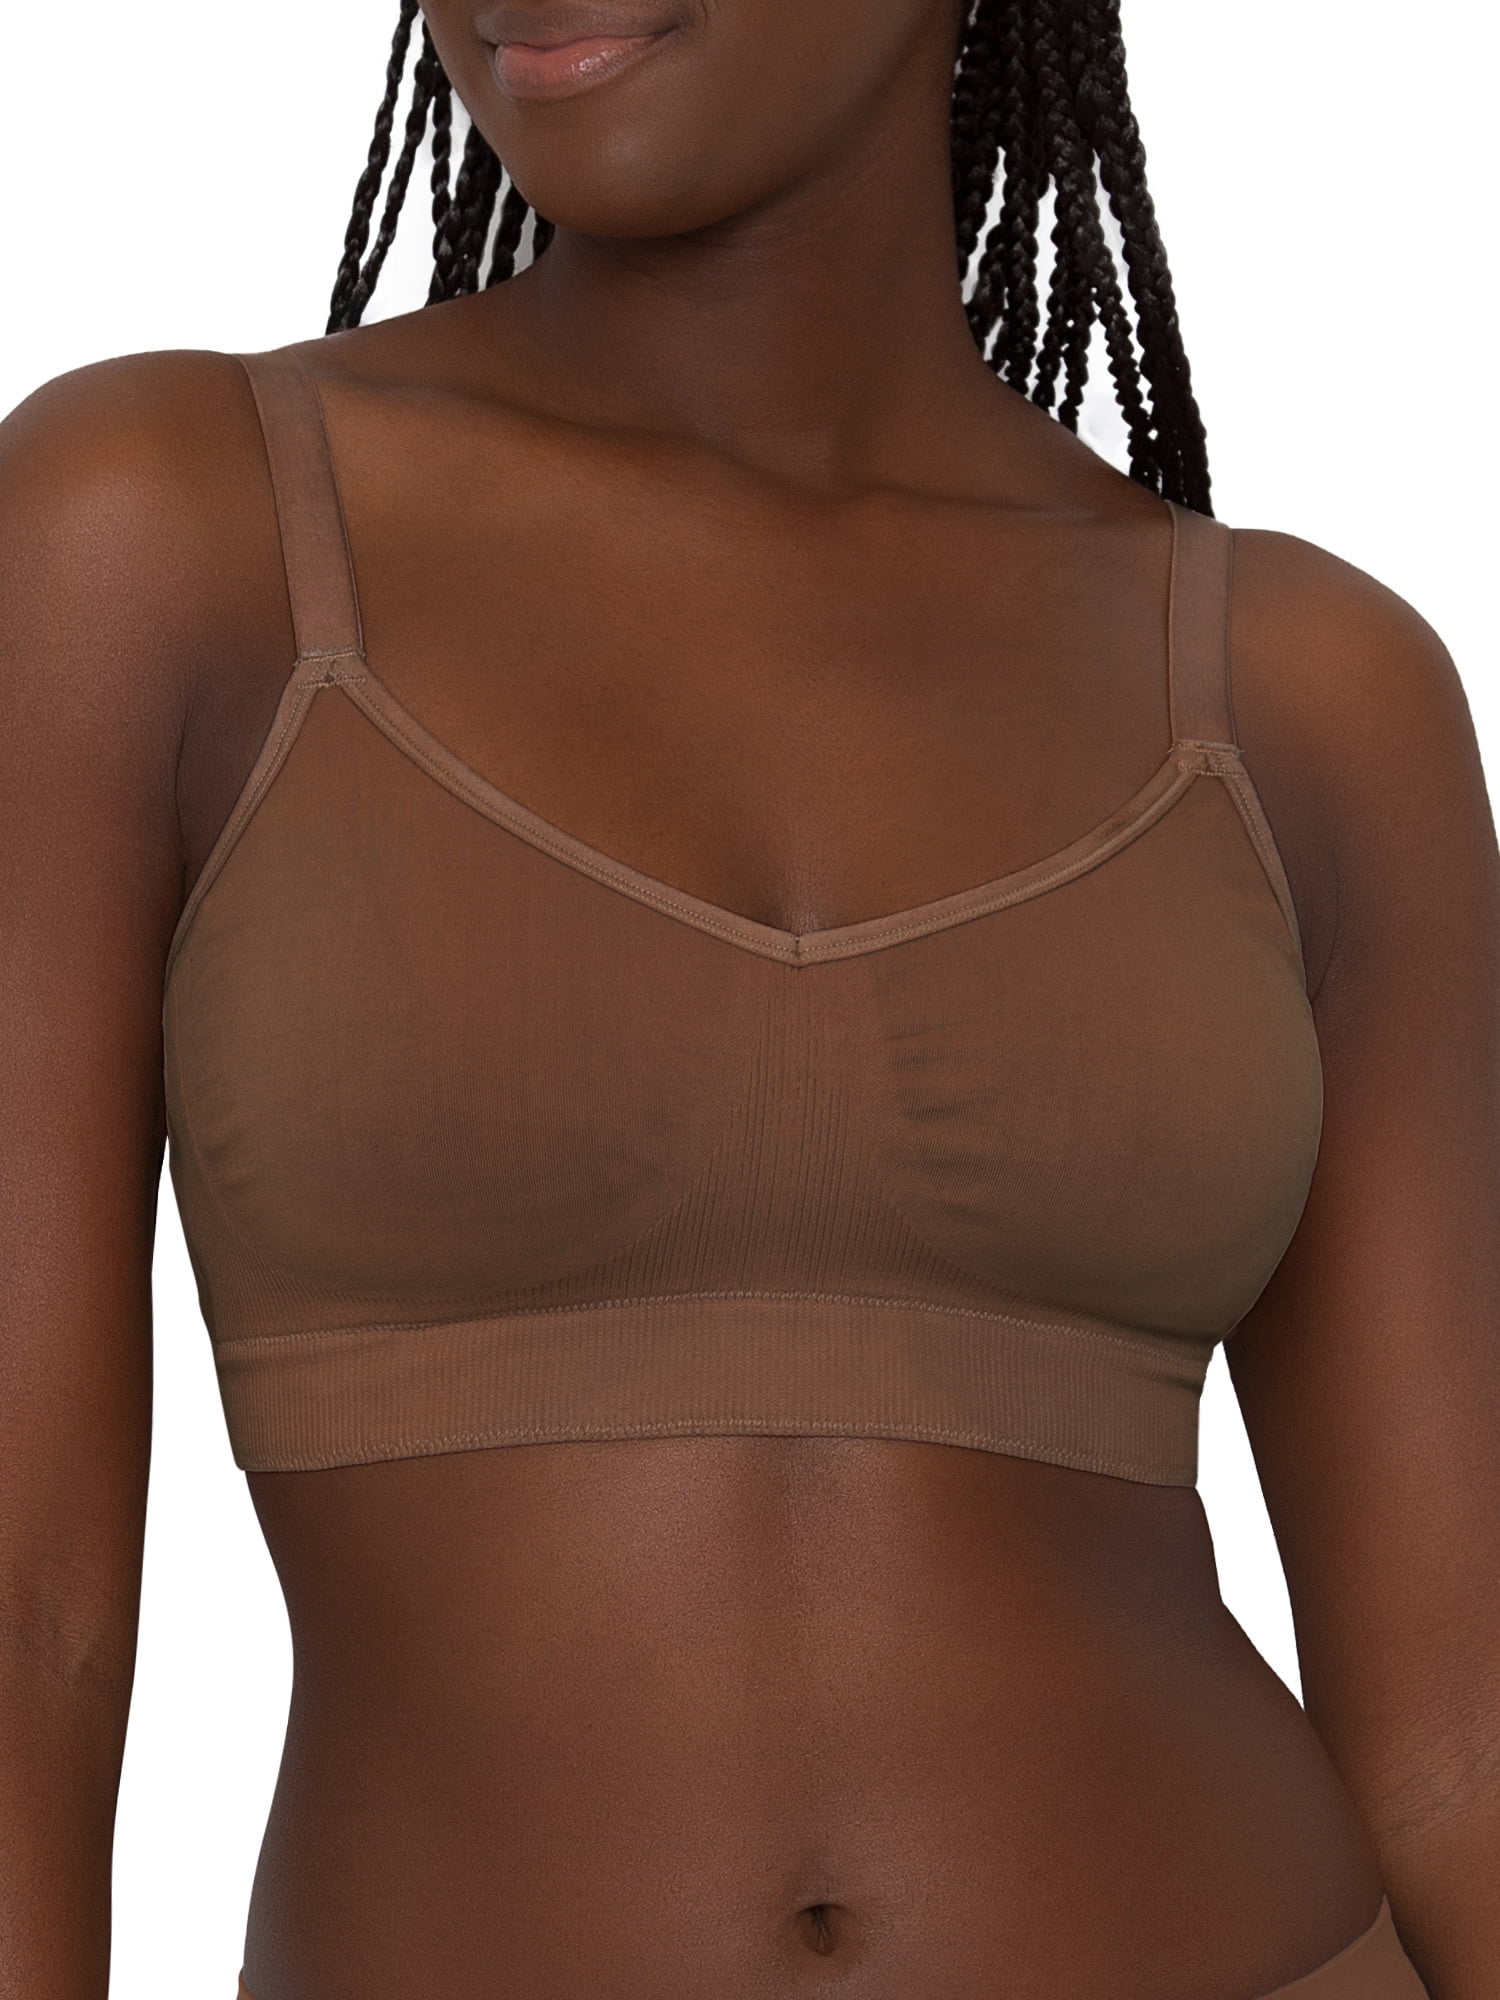 Brown cotton bra top, Bras, Women'secret